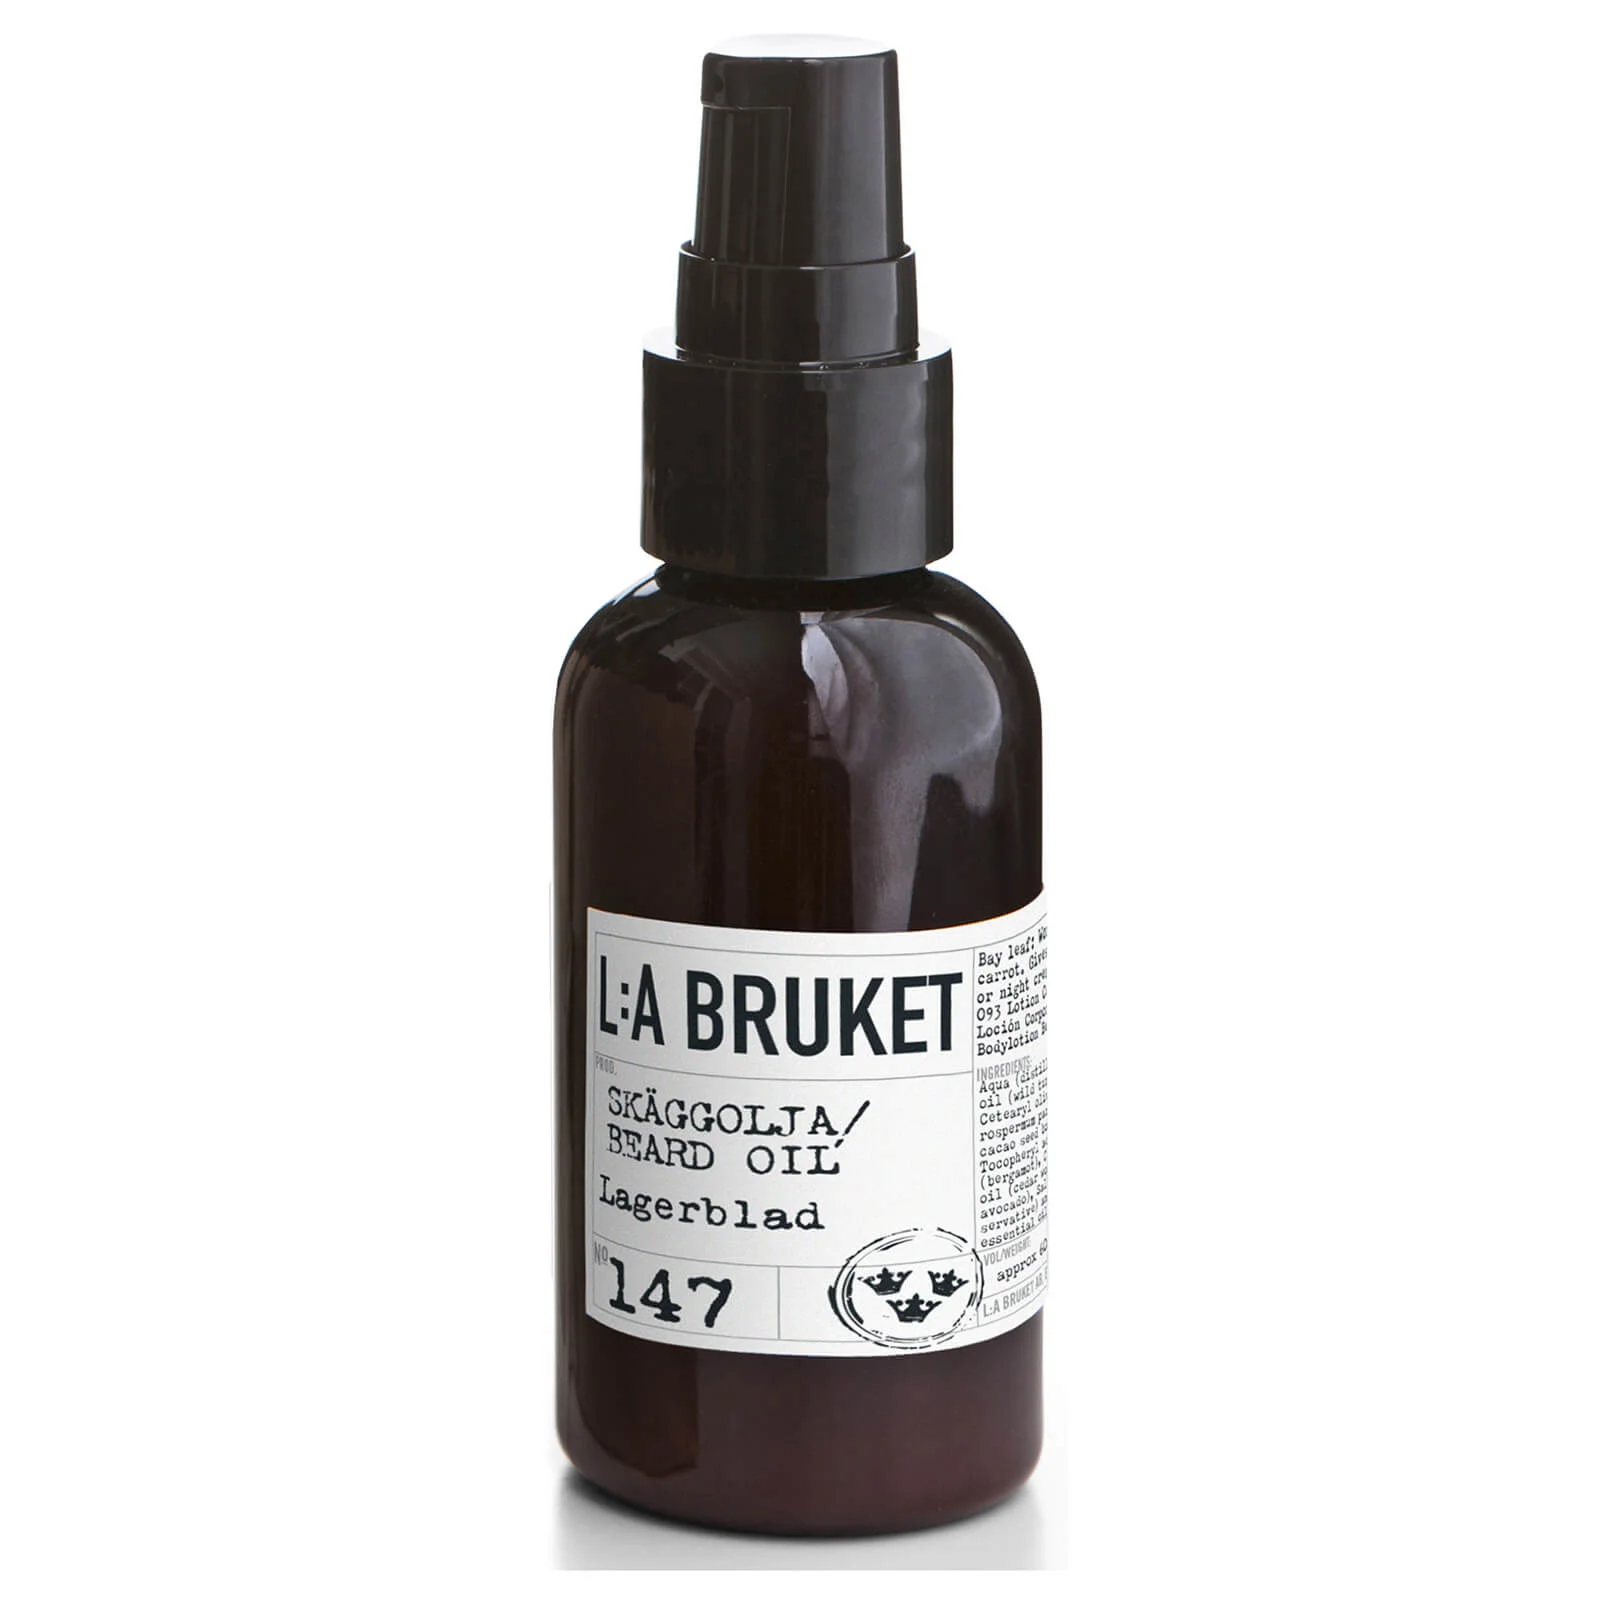 L:A BRUKET No. 147 Beard Oil 60ml Image 1